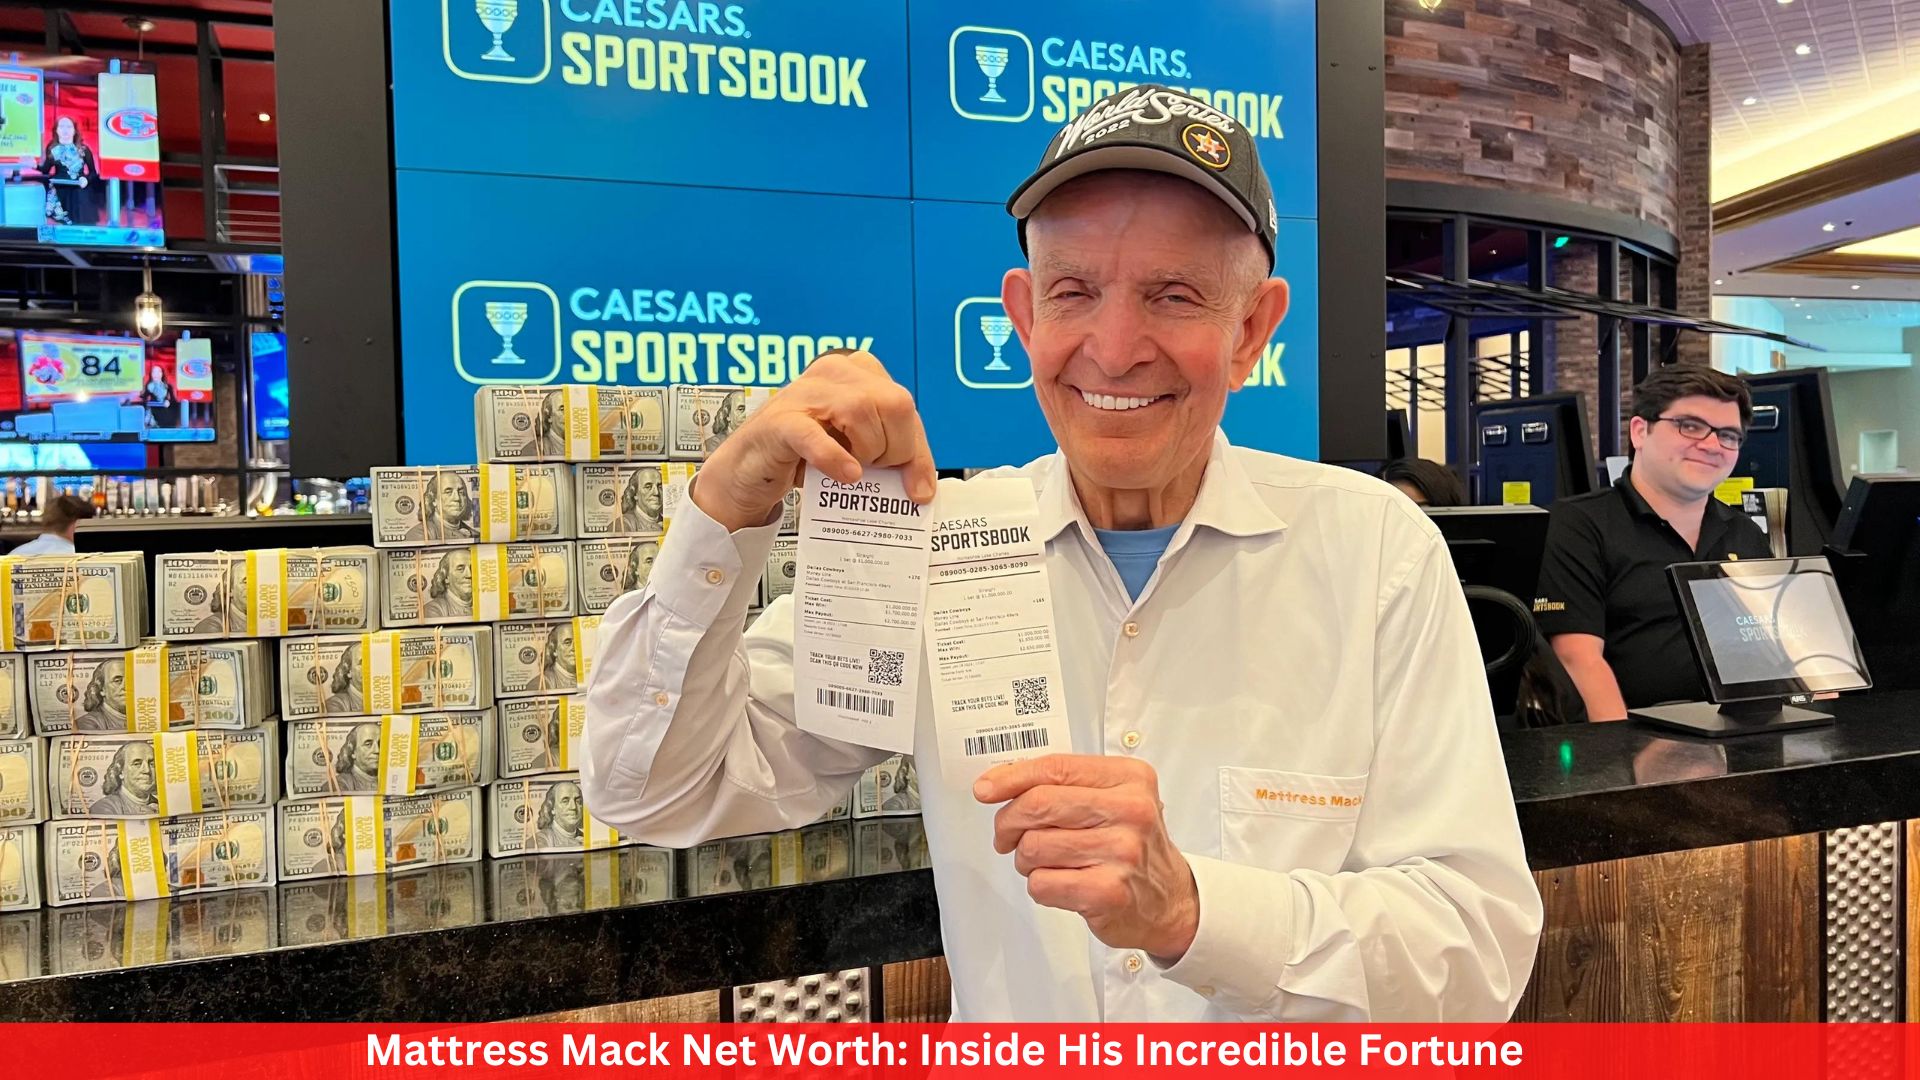 Mattress Mack Net Worth: Inside His Incredible Fortune